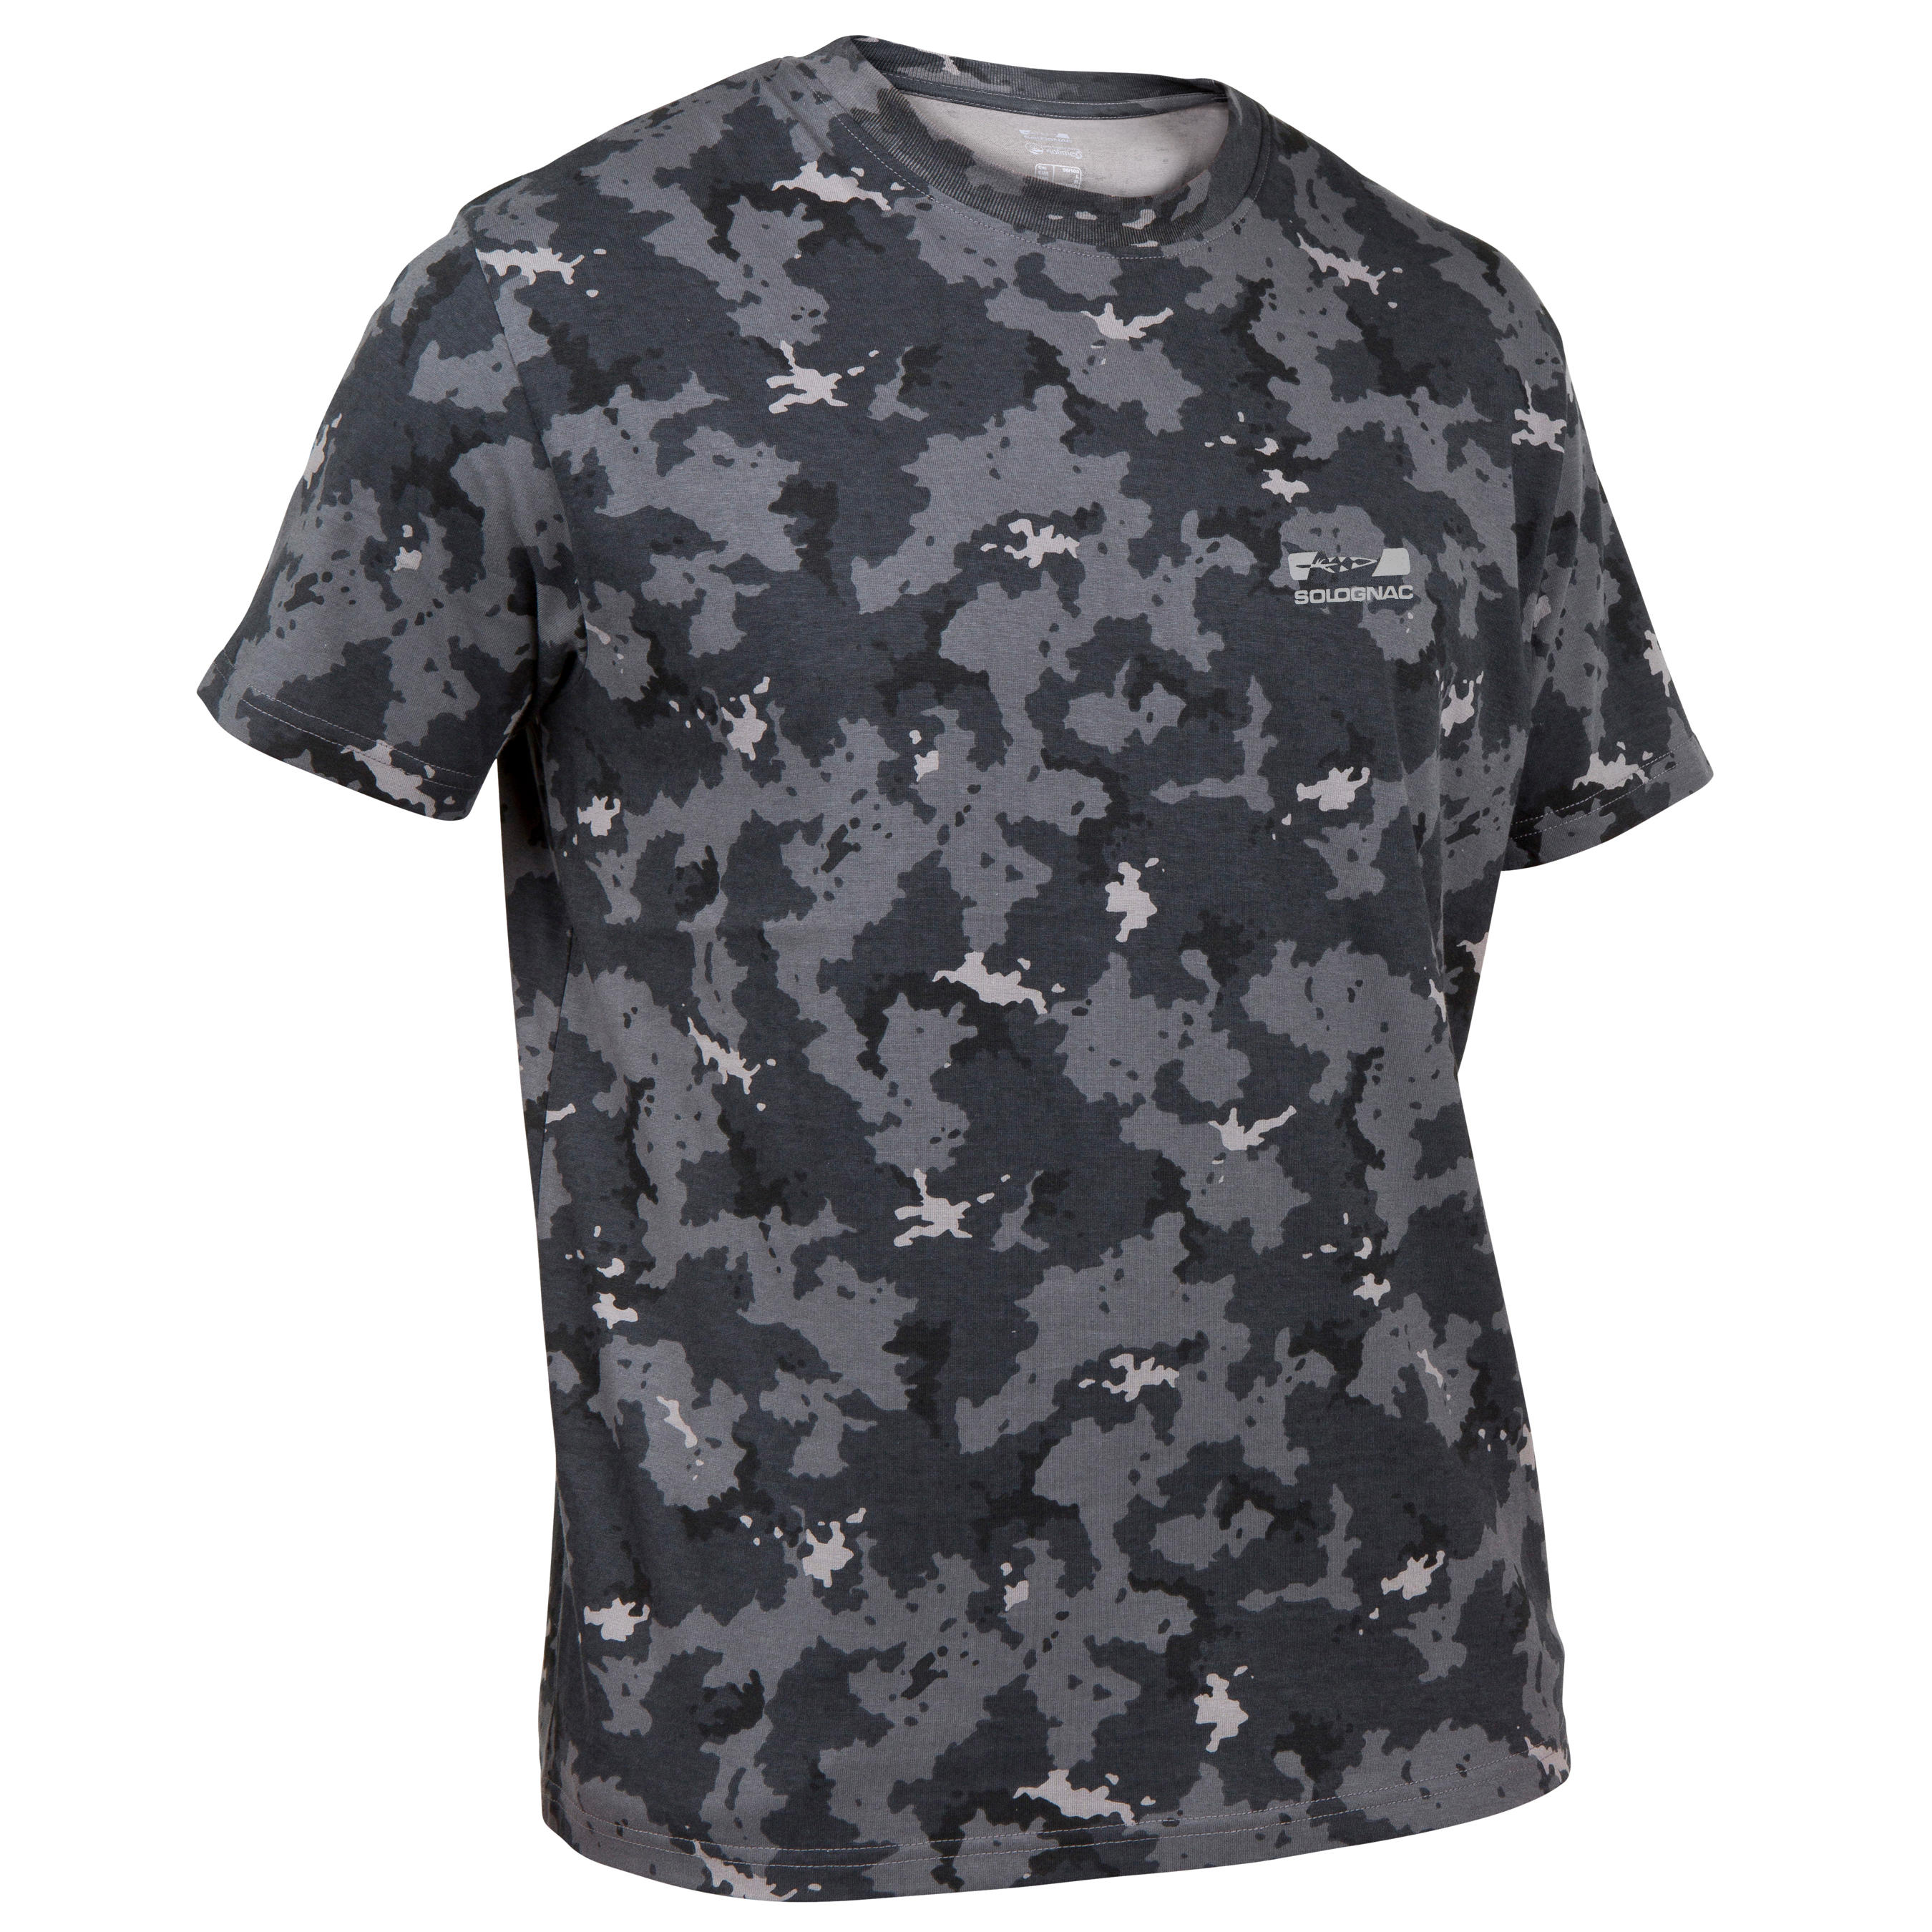 decathlon military t shirt